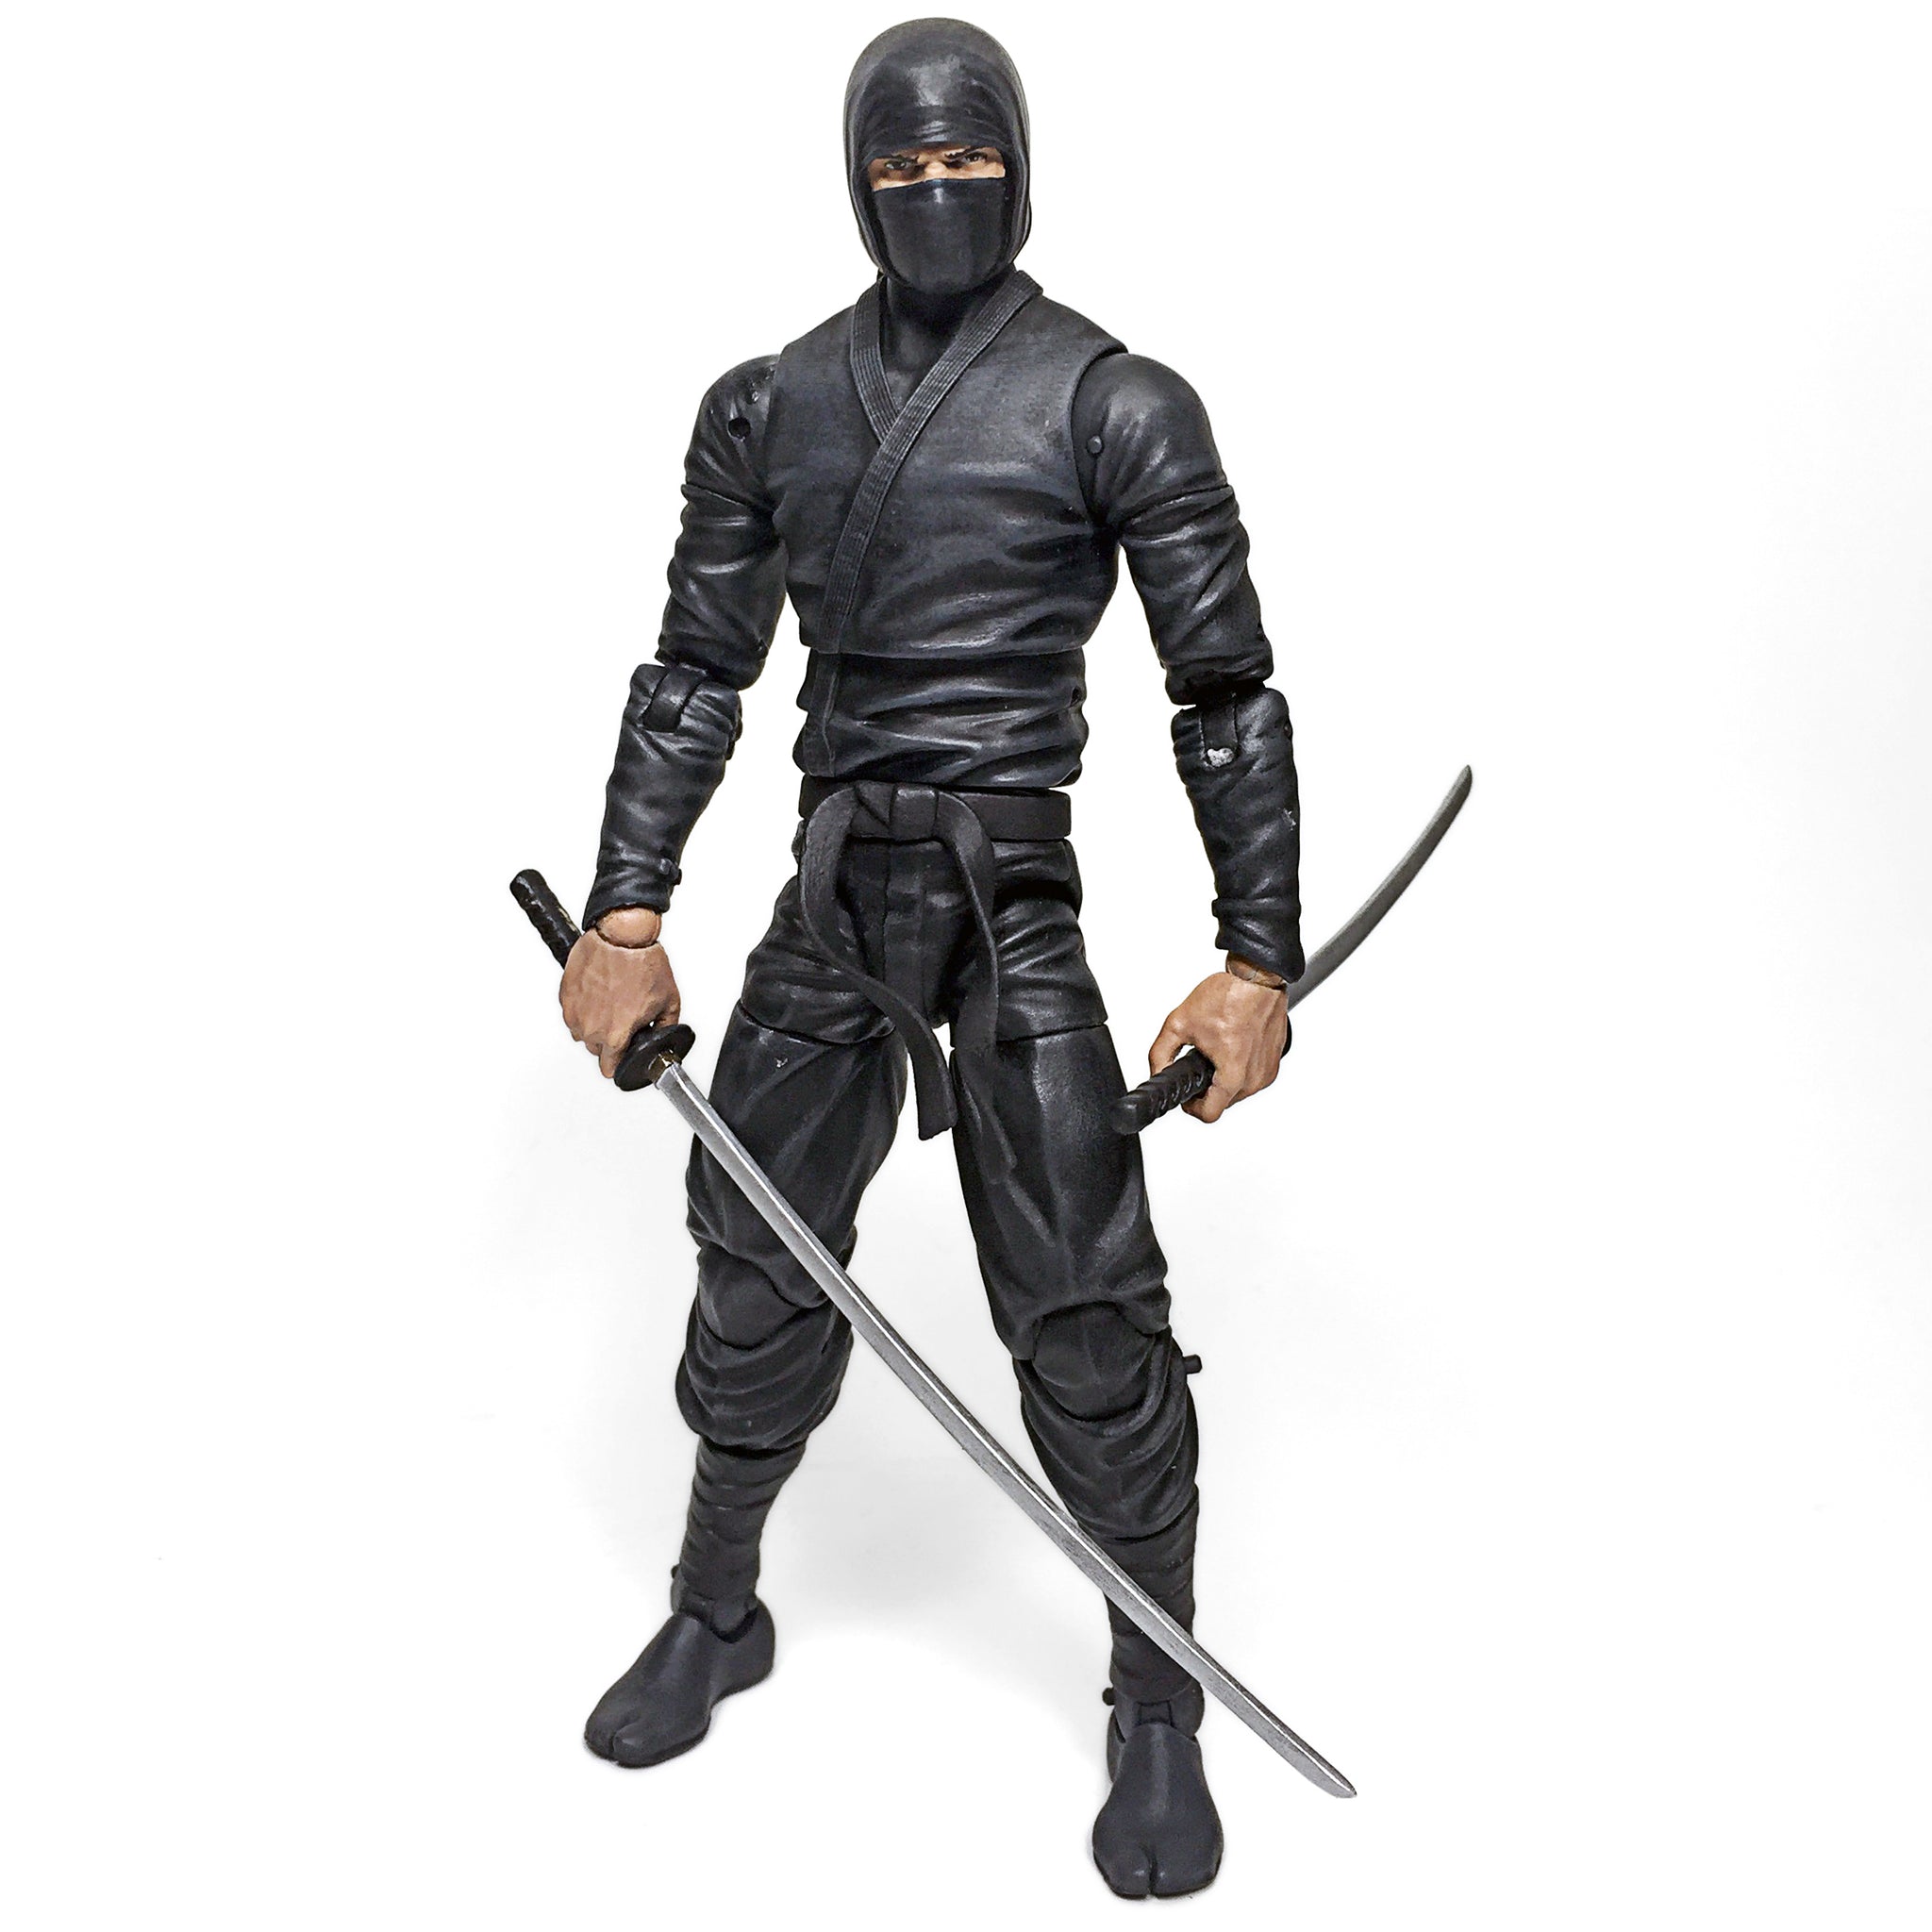 The Black Ninja - Wikipedia